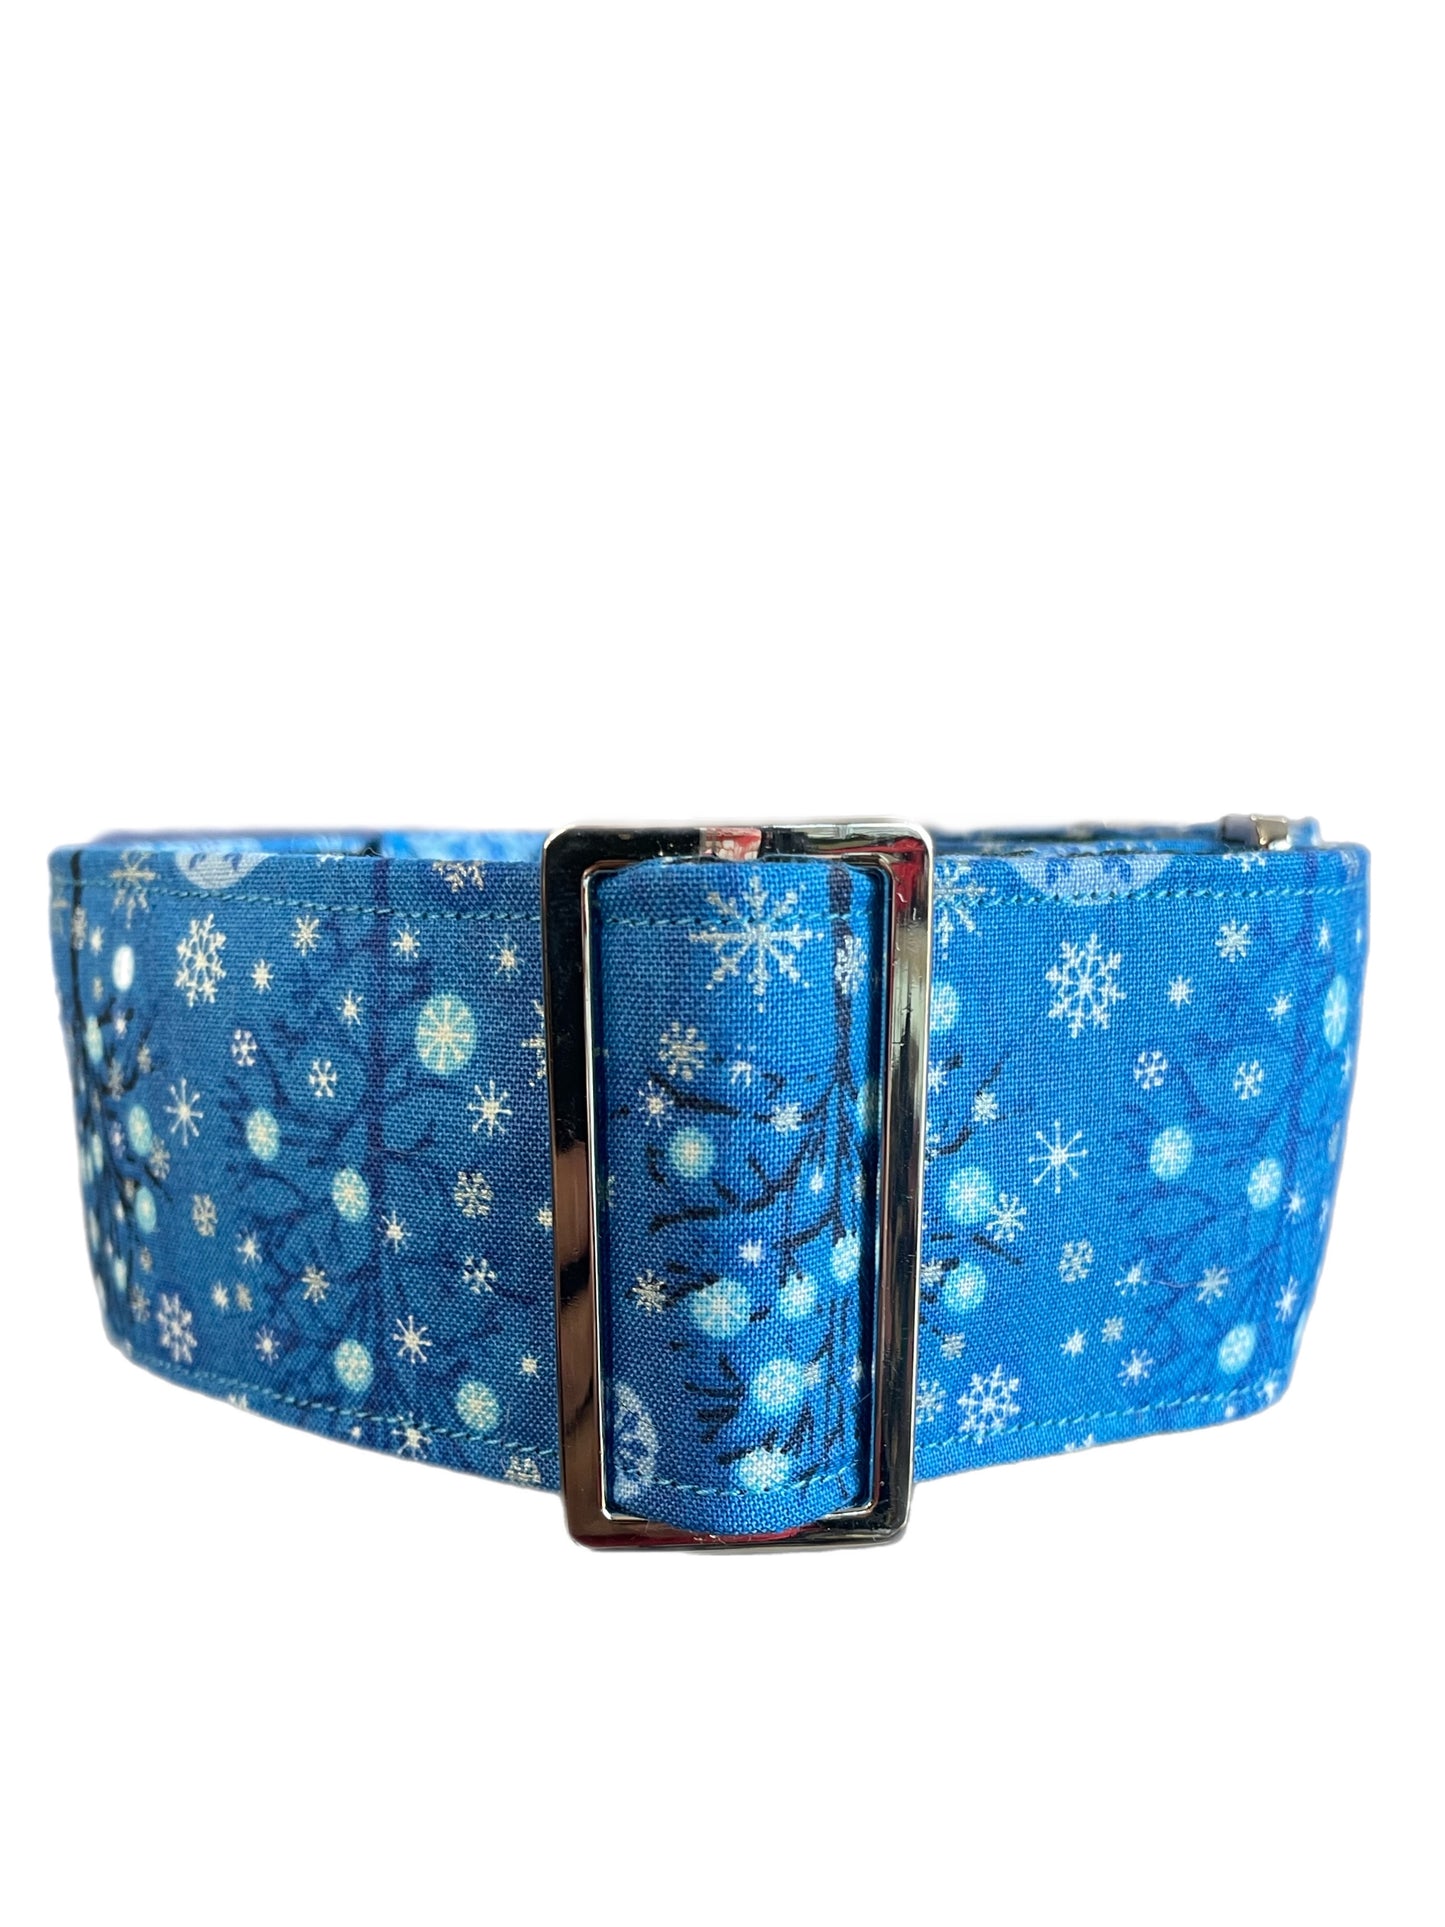 Blue Christmas spirit Cotton covered greyhound Martingale collar 50mm width super soft